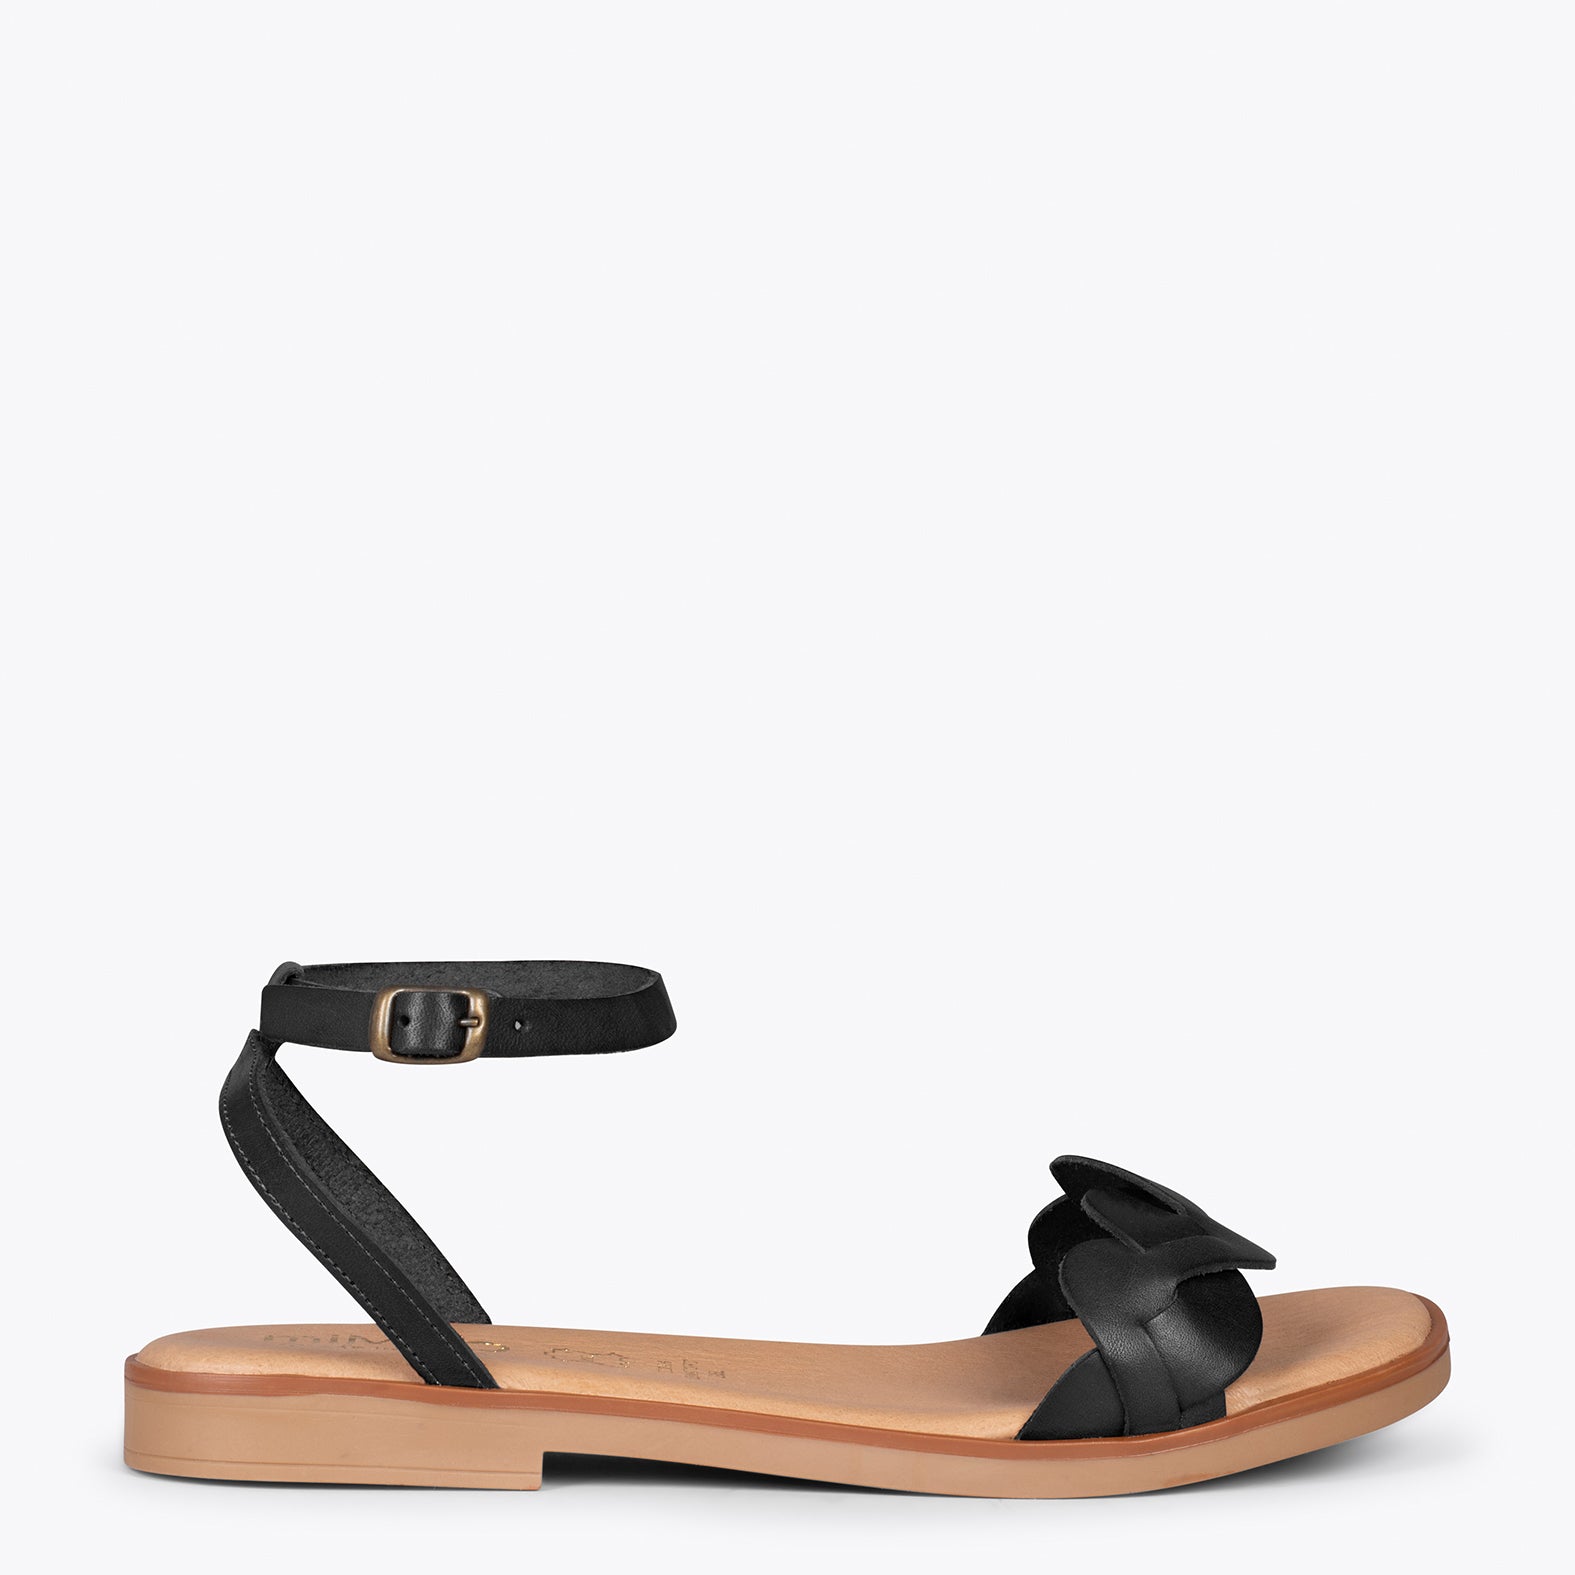 ARECA – BLACK flat sandal with braided upper